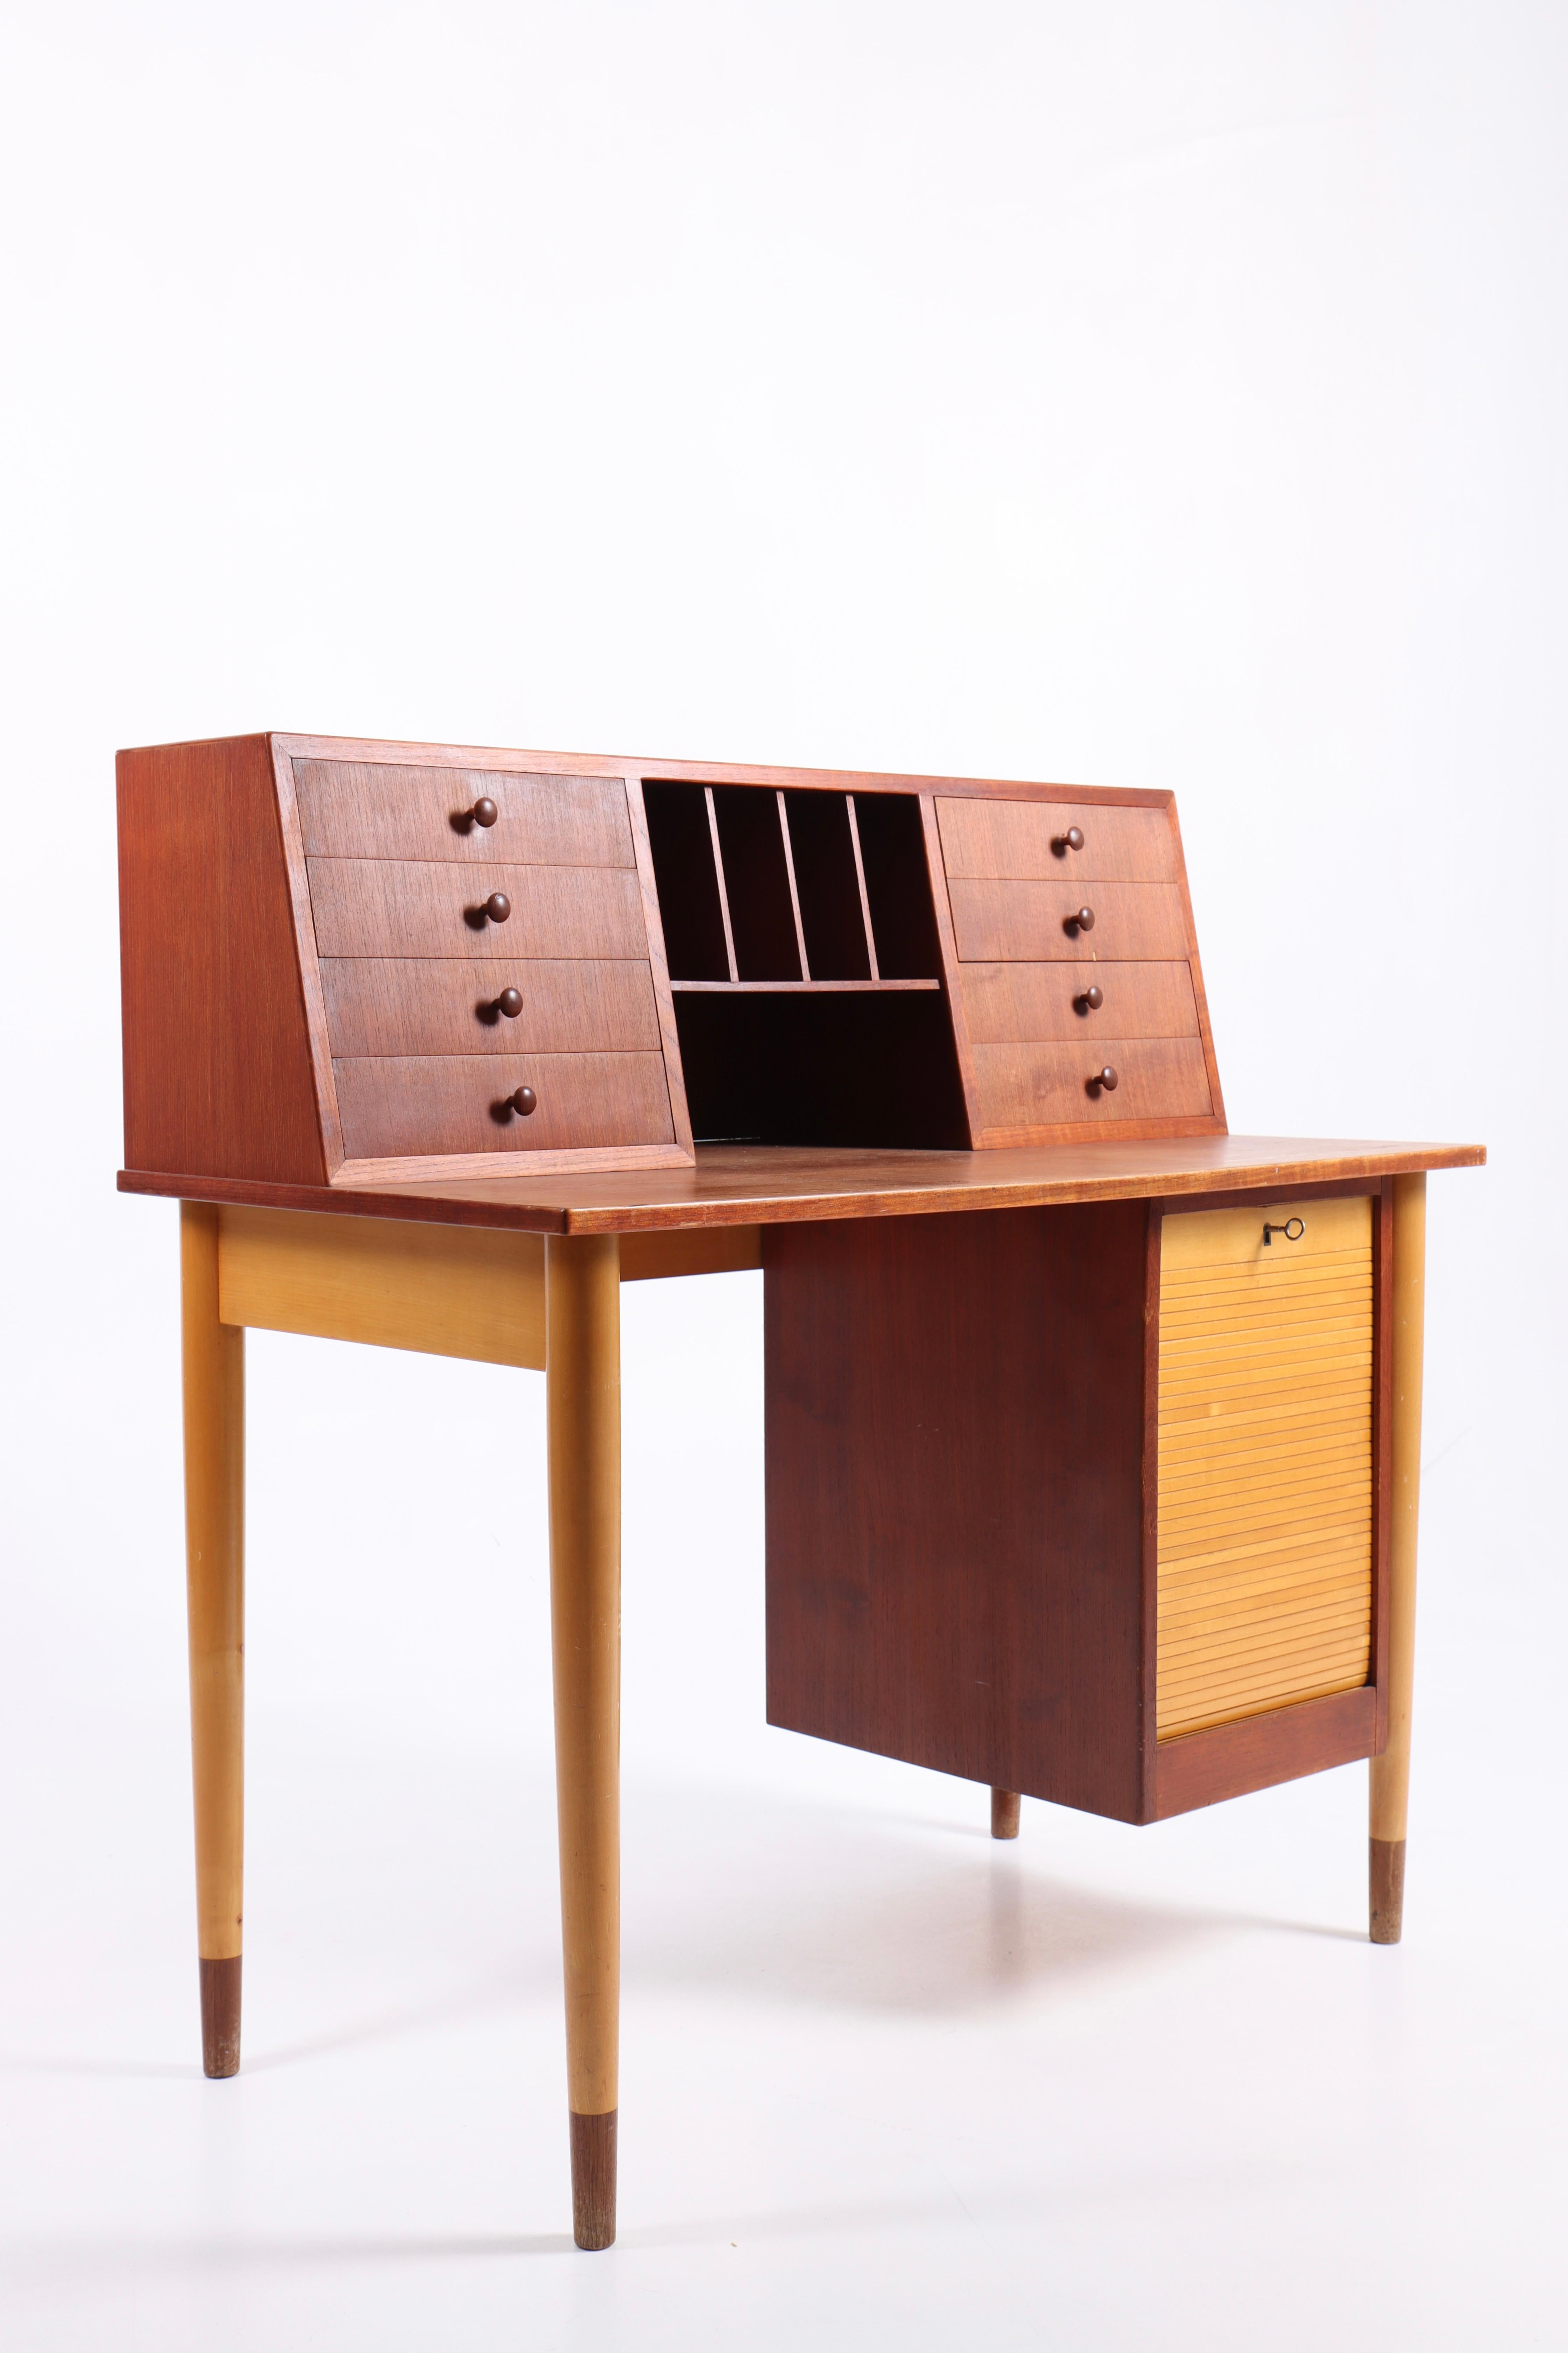 Midcentury Desk in Teak & Beech with Organizer, 1950s For Sale 1